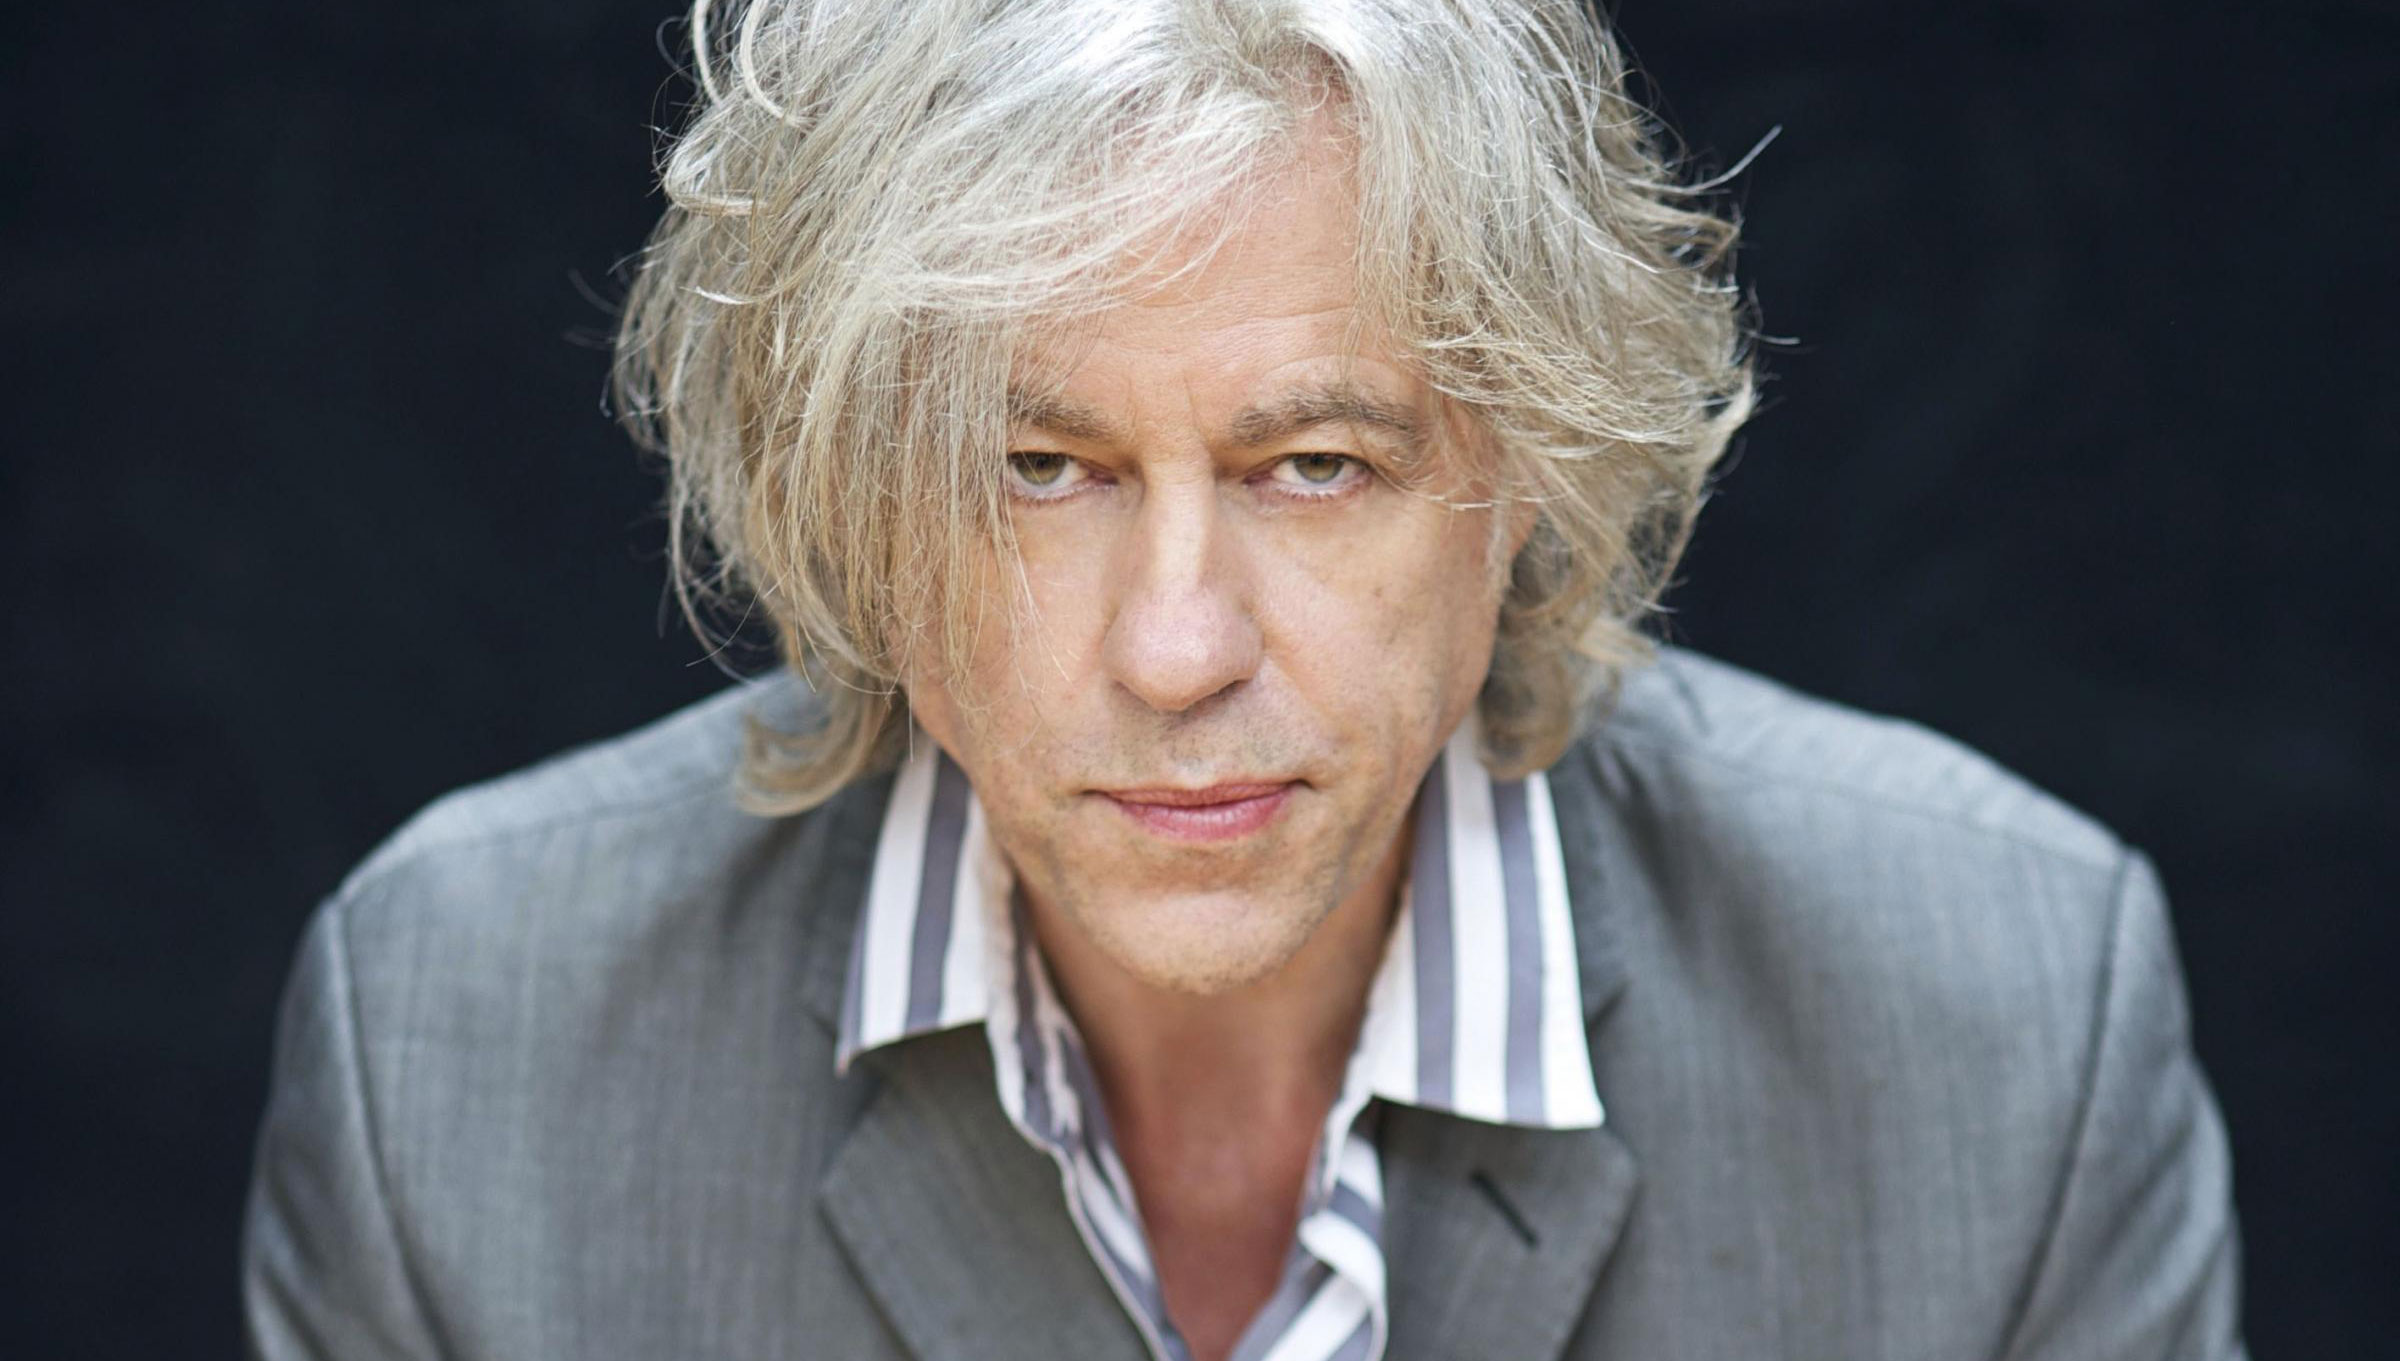 Bob Geldof sued over I Don’t Like Mondays